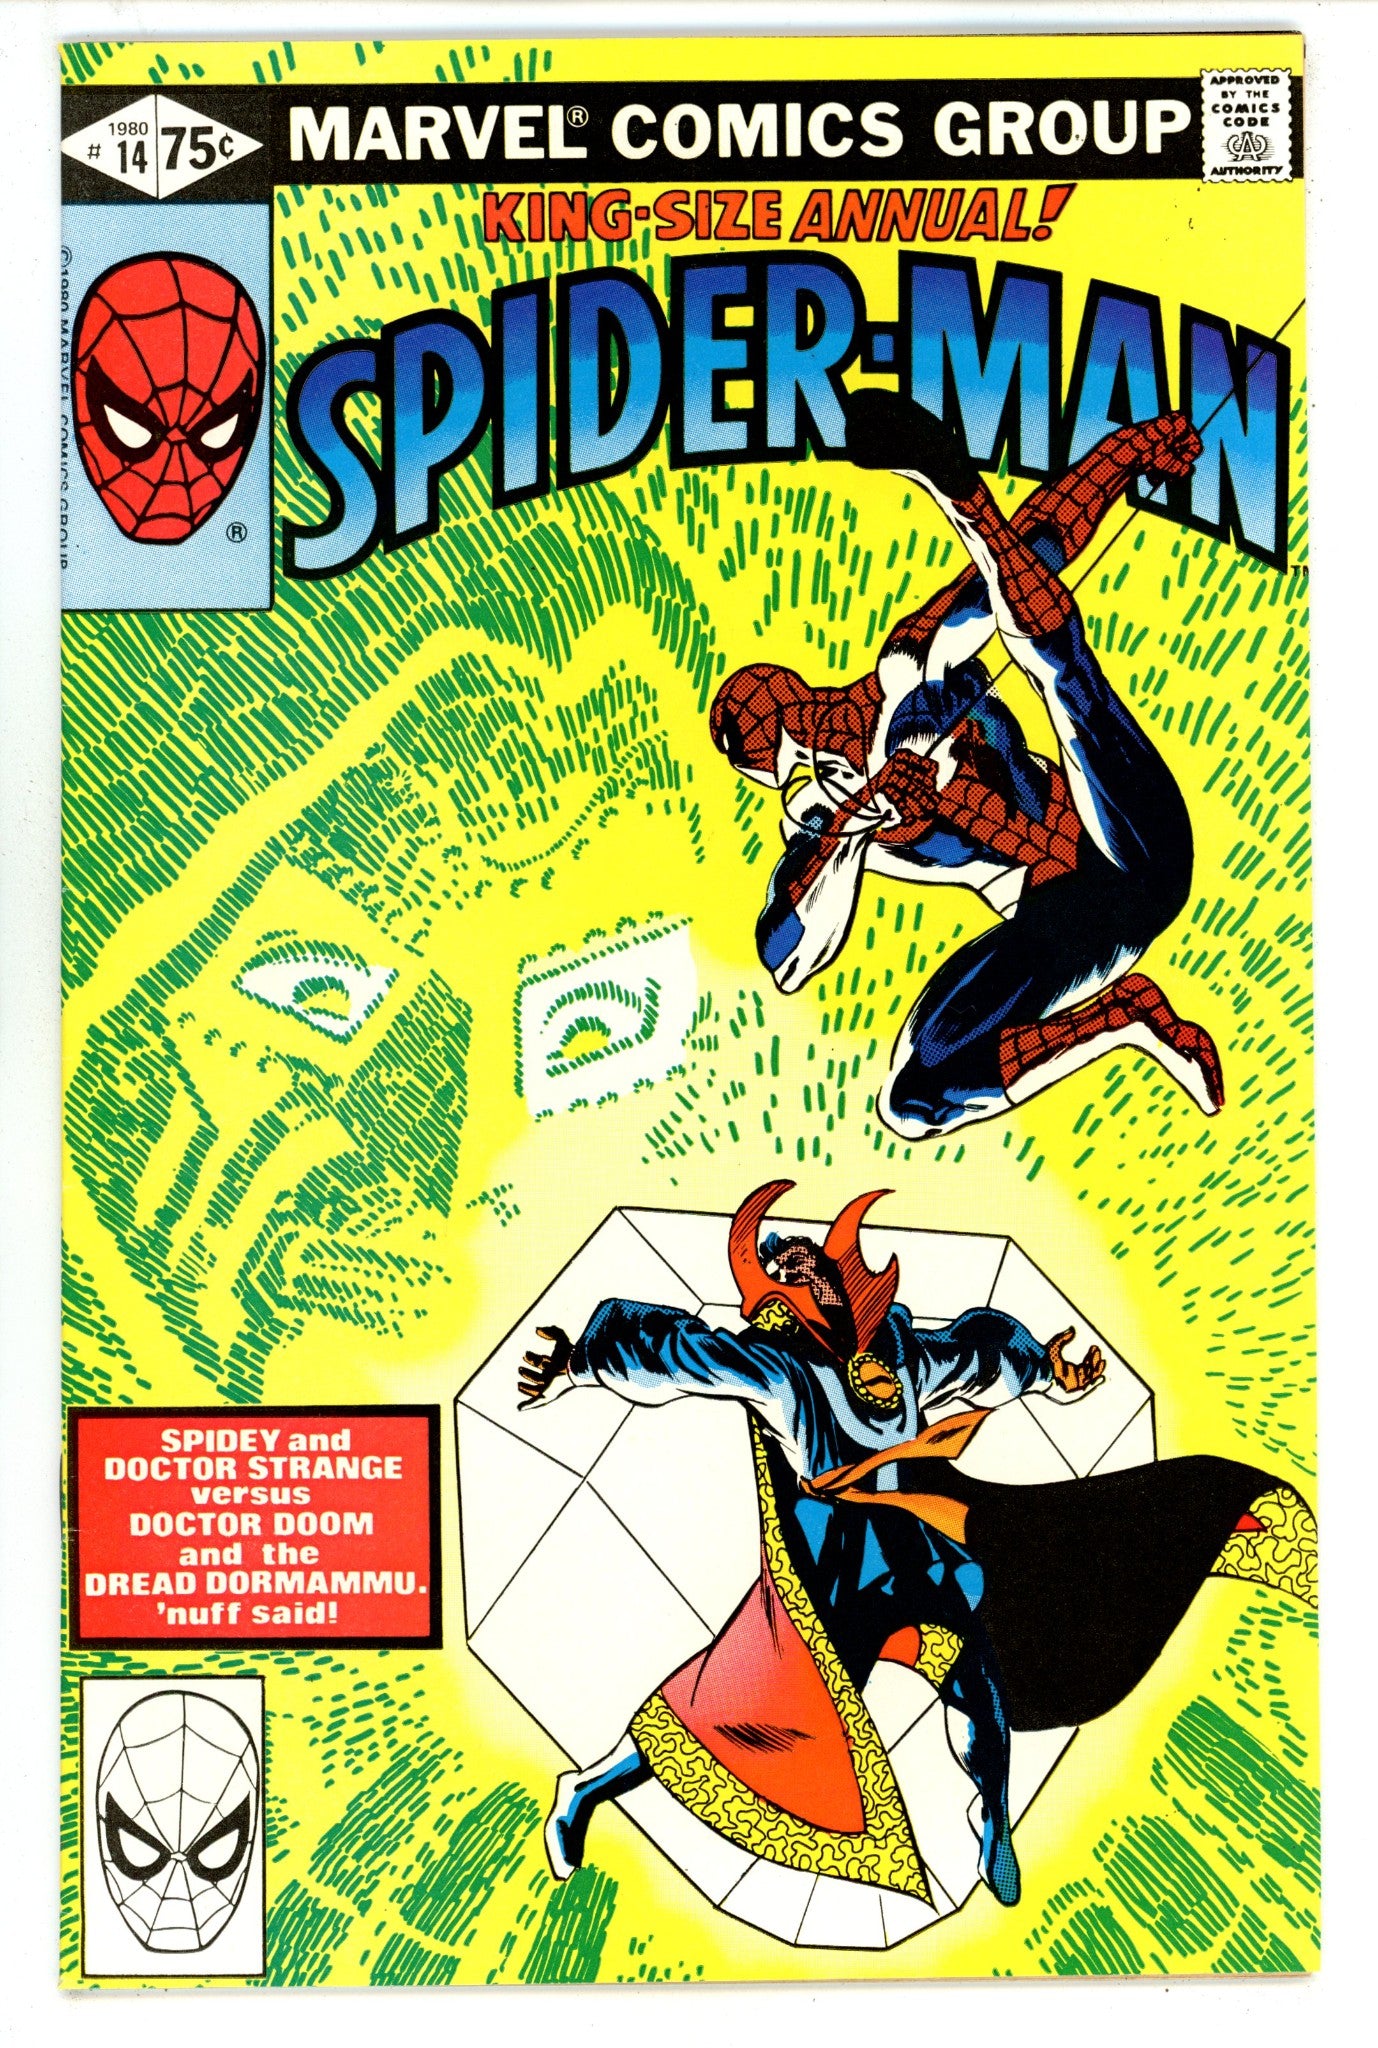 The Amazing Spider-Man Annual Vol 1 14 VF- (7.5) (1980) 